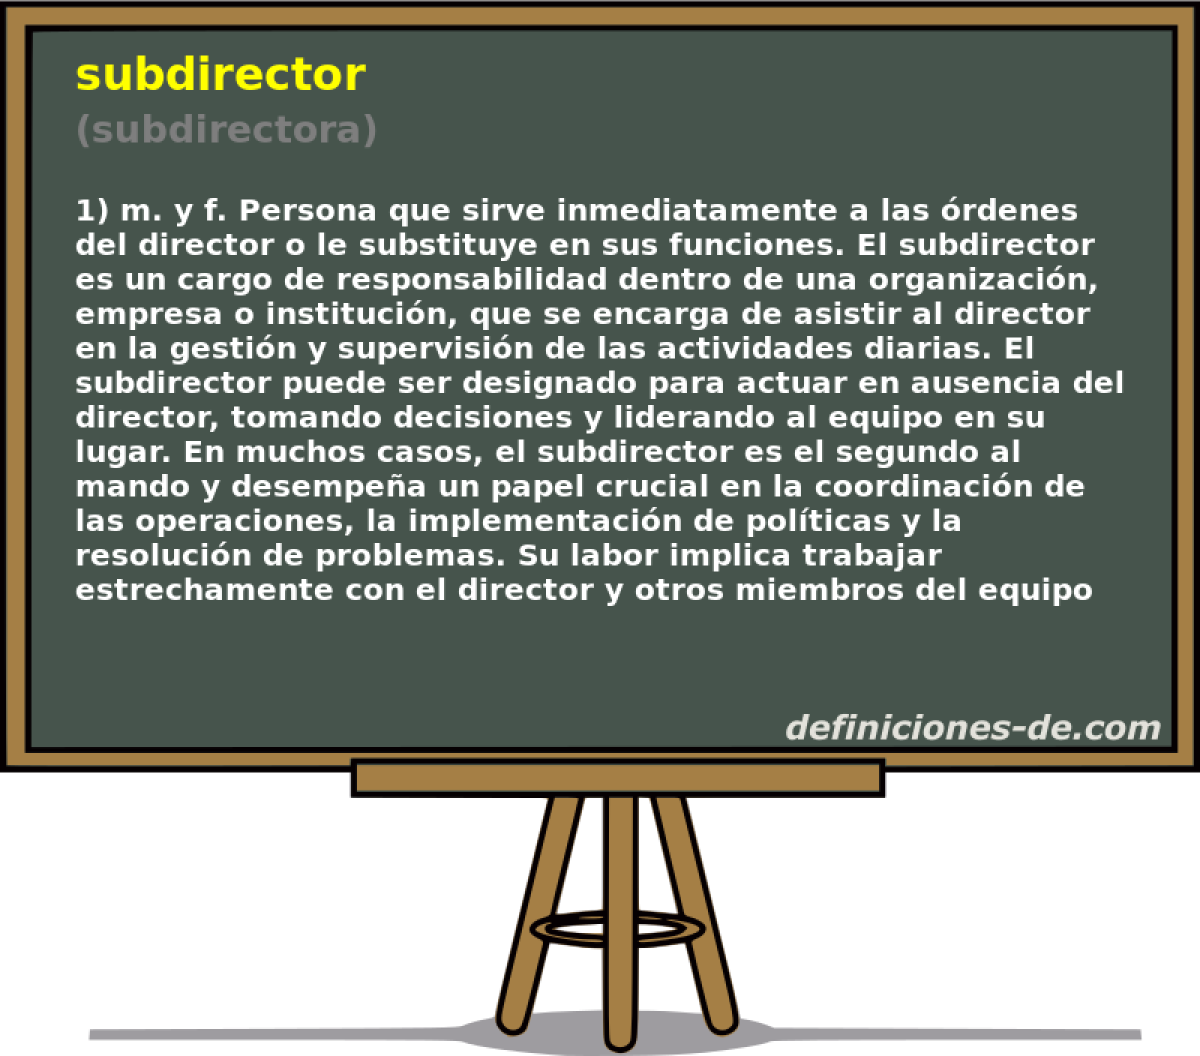 subdirector (subdirectora)